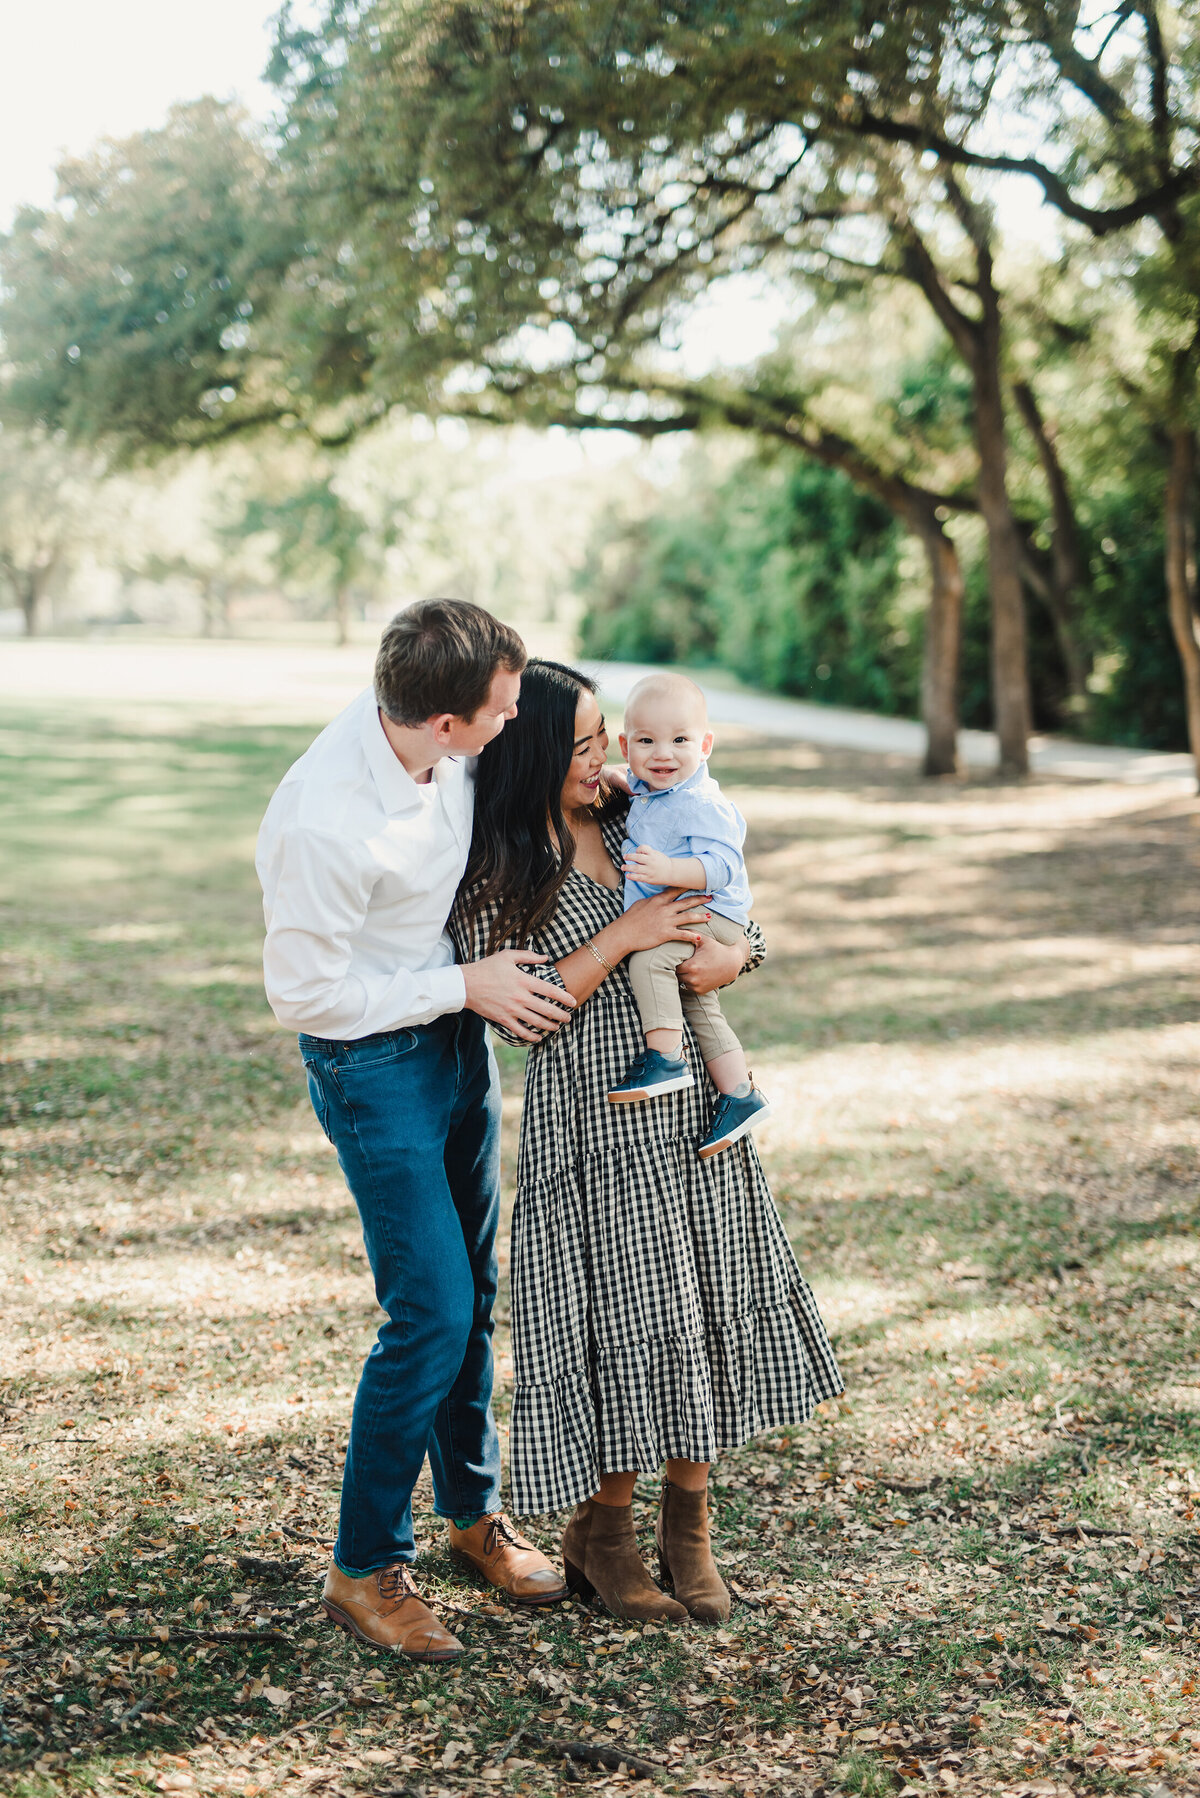 Dallas Family Photographer + Newborn Photographer - Lindsay Davenport Photography - Priscilla October 11 2020 Mini